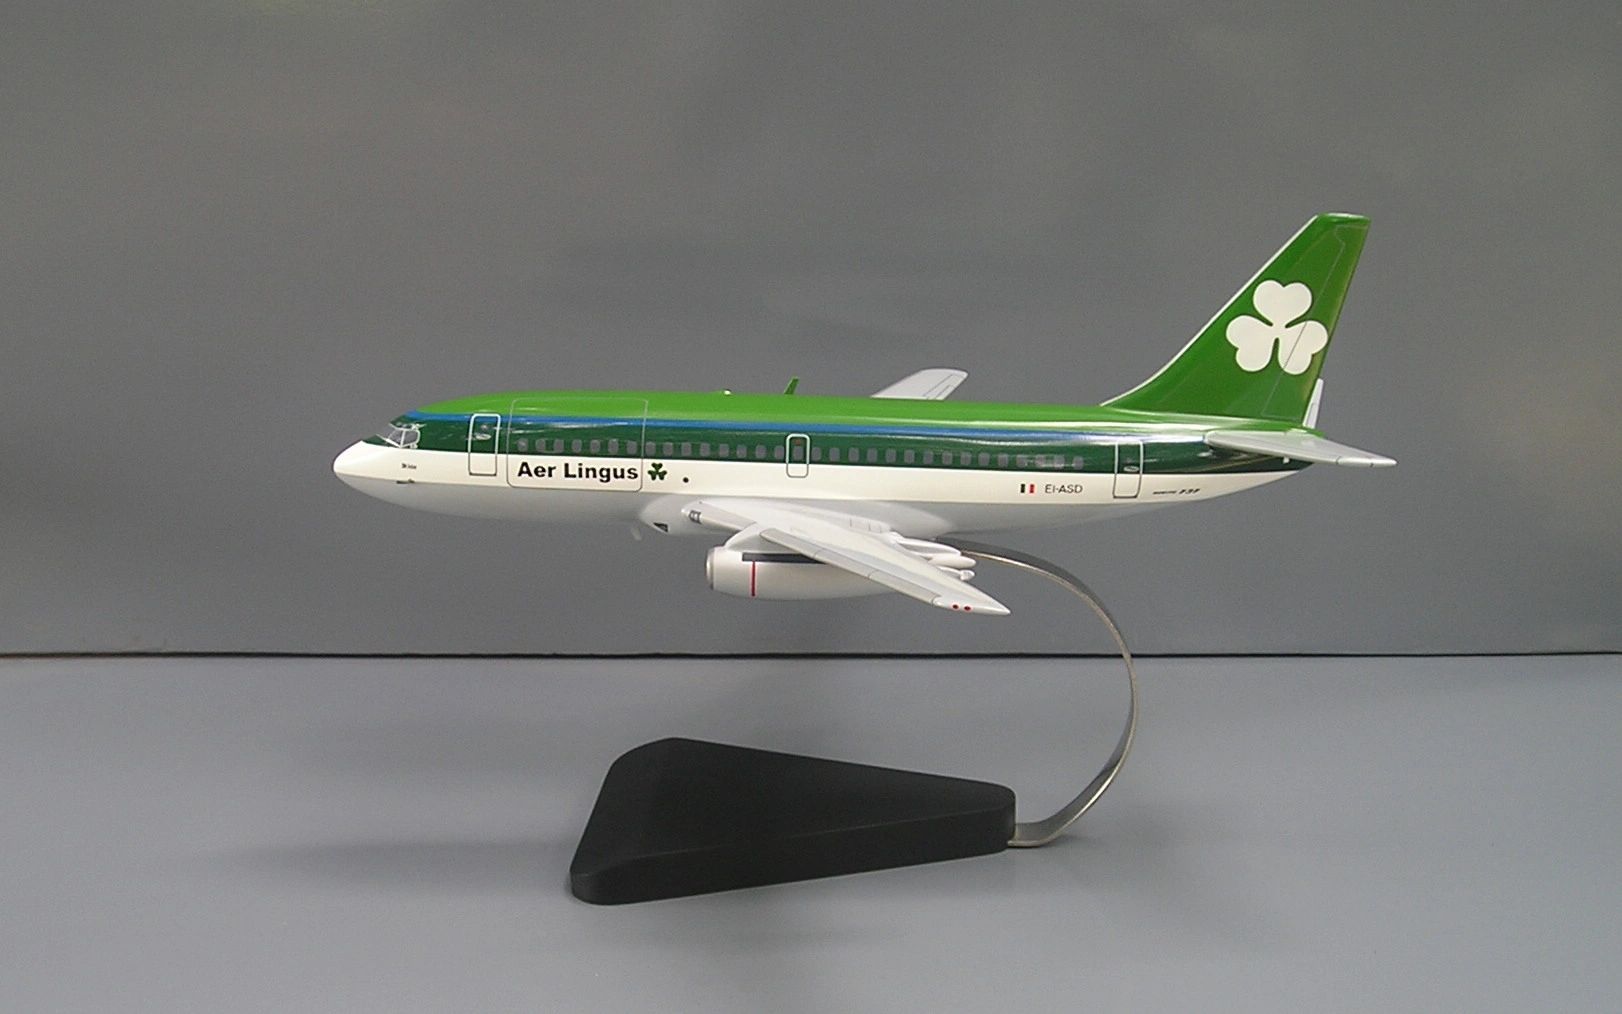 Aer Lingus custom models